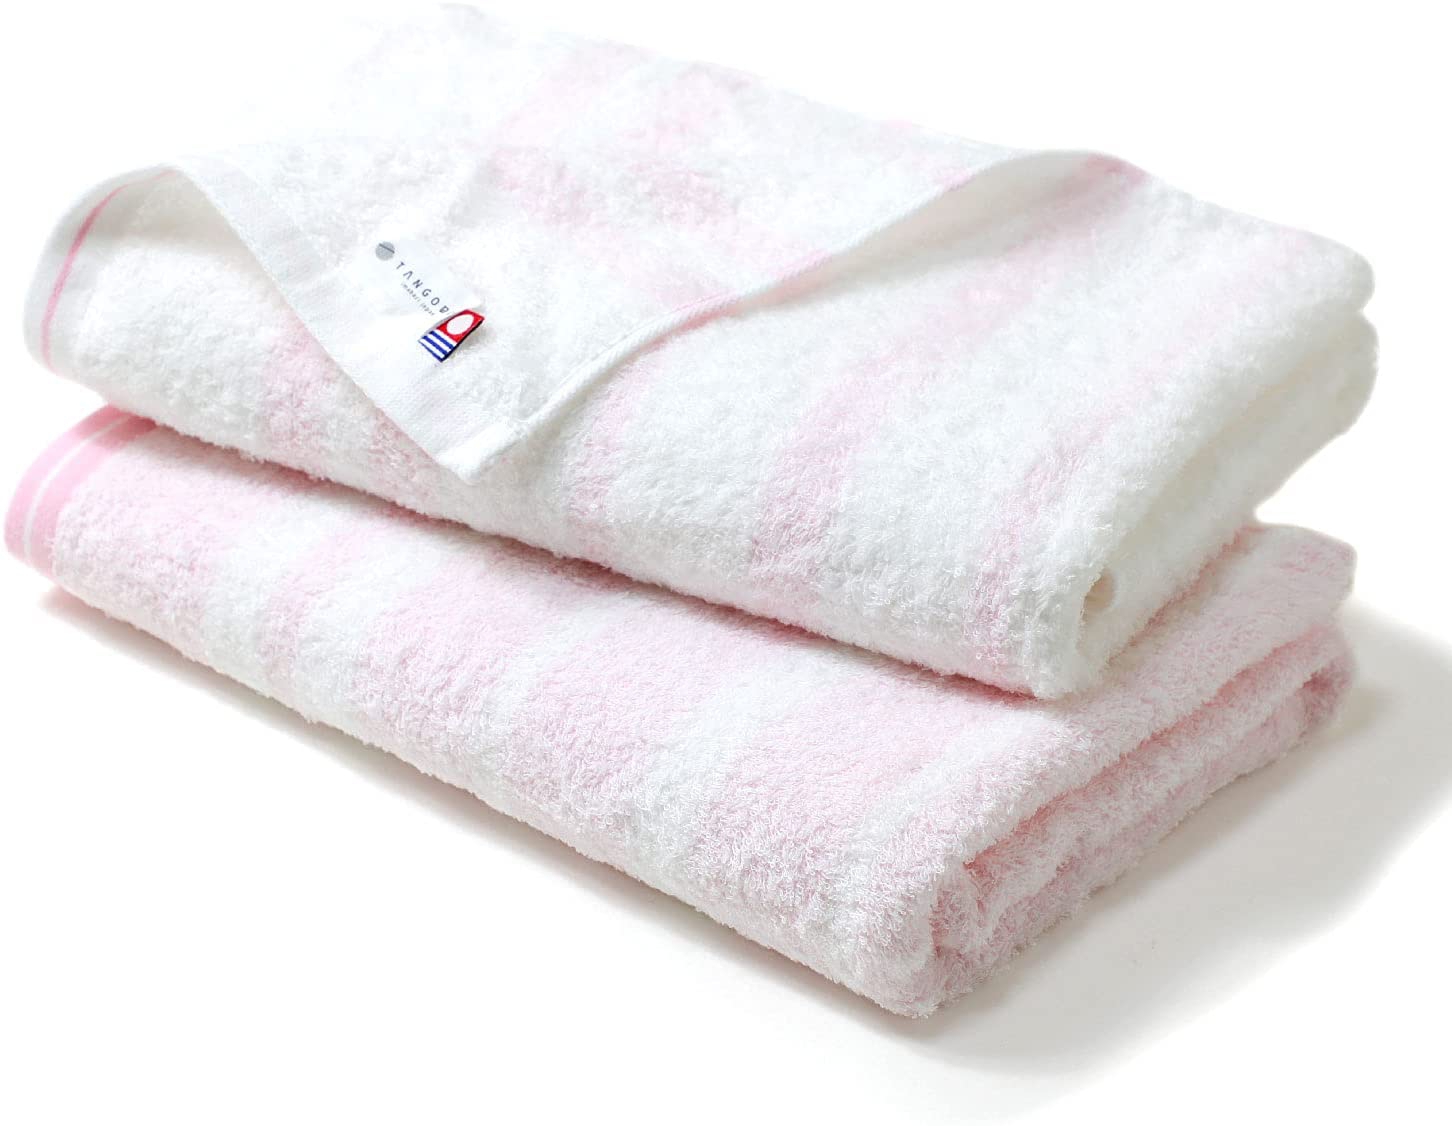 TANGONO(タンゴノ) Border towel バスタオルの商品画像1 